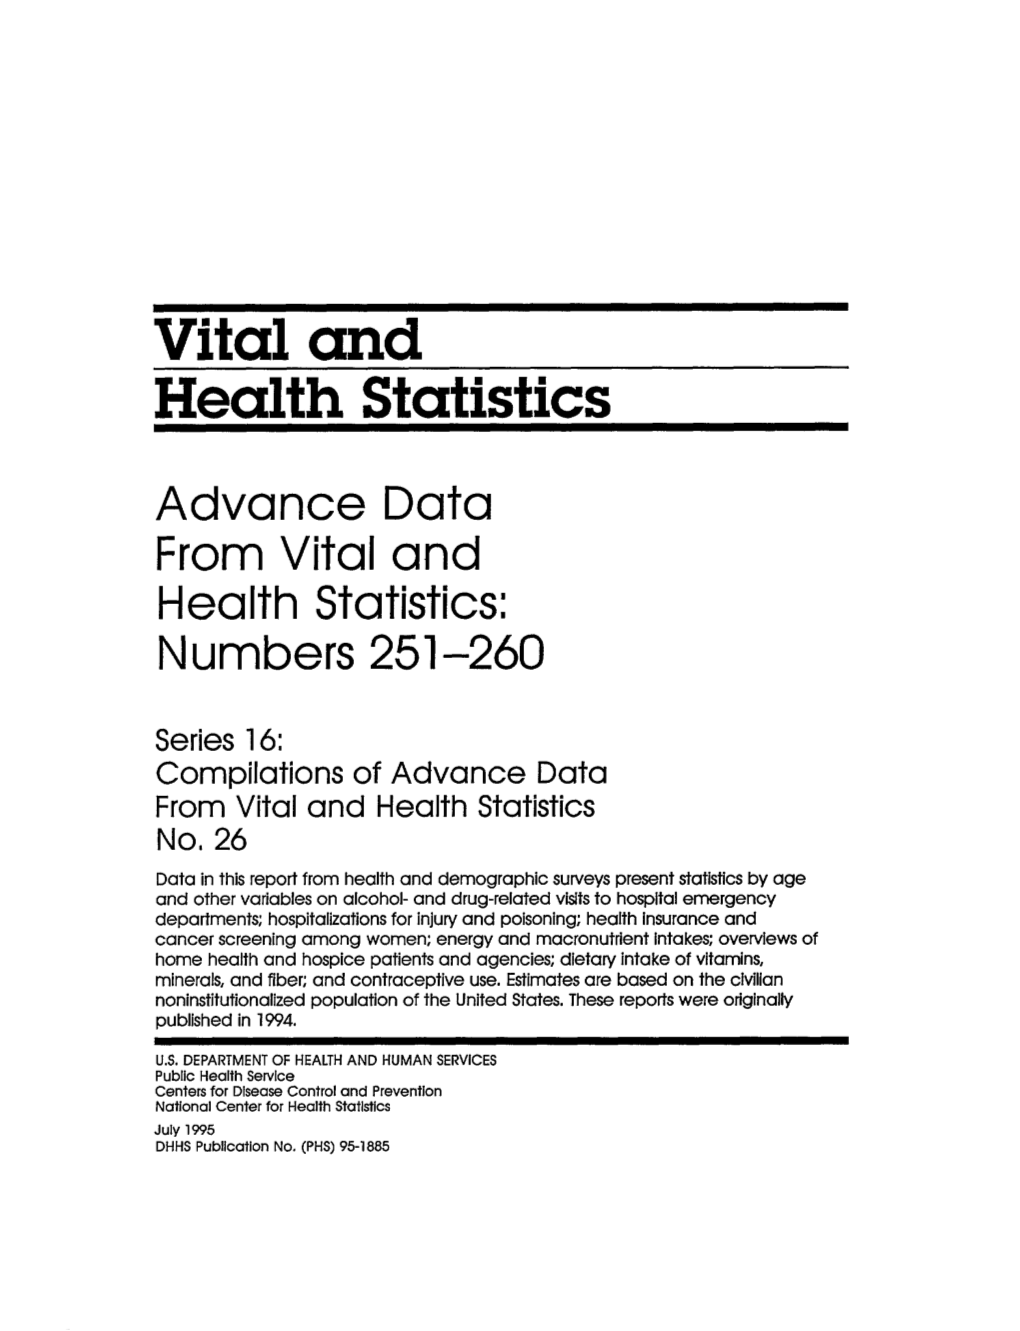 Vital and Health Statistics; Series 16, No. 26